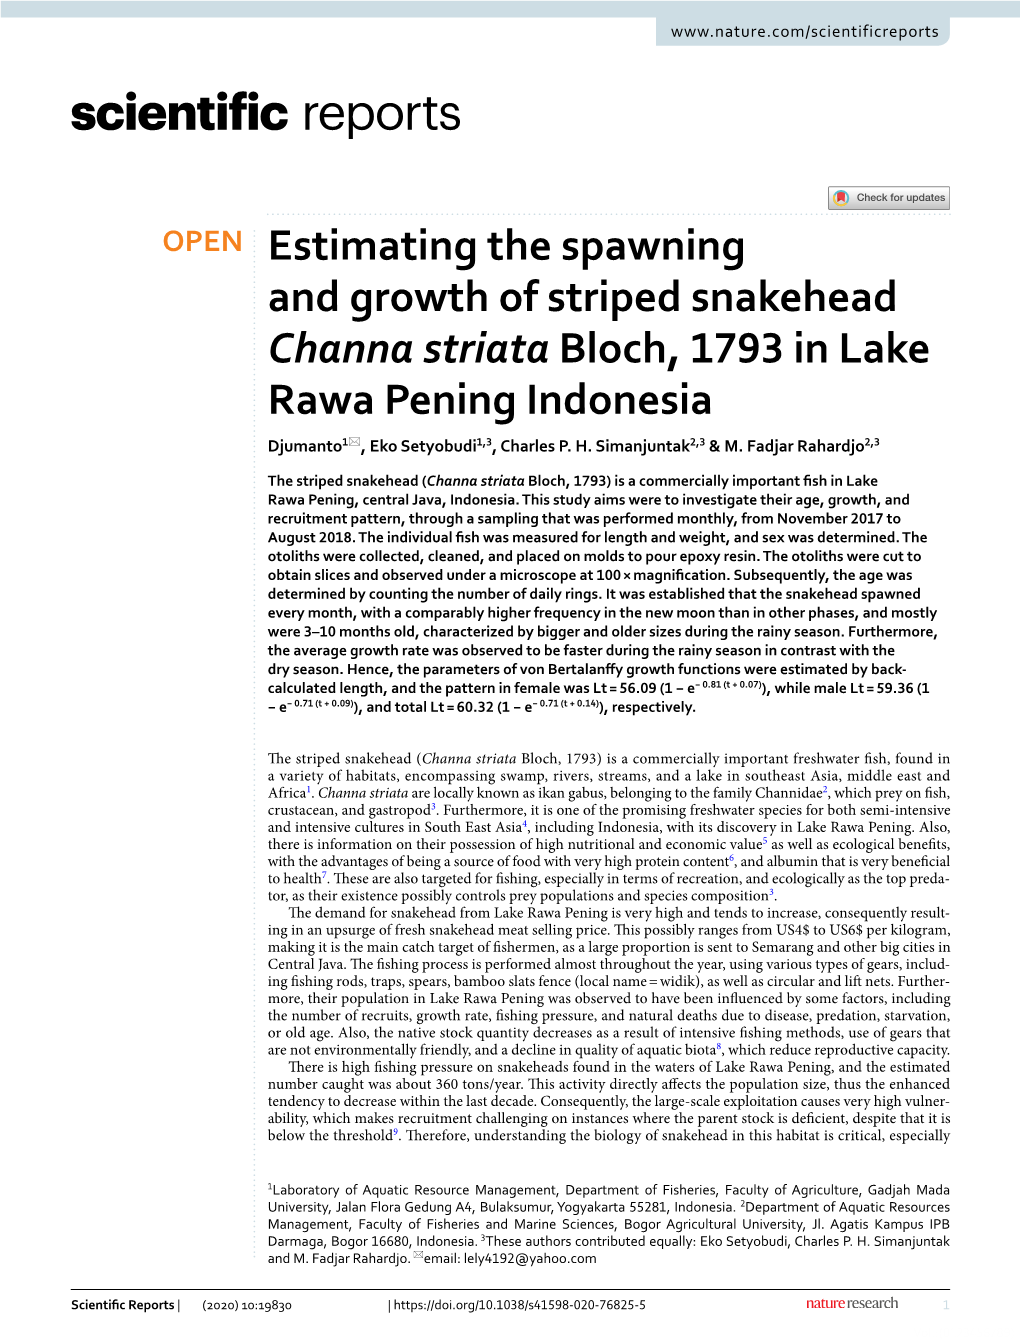 Estimating the Spawning and Growth of Striped Snakehead Channa Striata Bloch, 1793 in Lake Rawa Pening Indonesia Djumanto1*, Eko Setyobudi1,3, Charles P